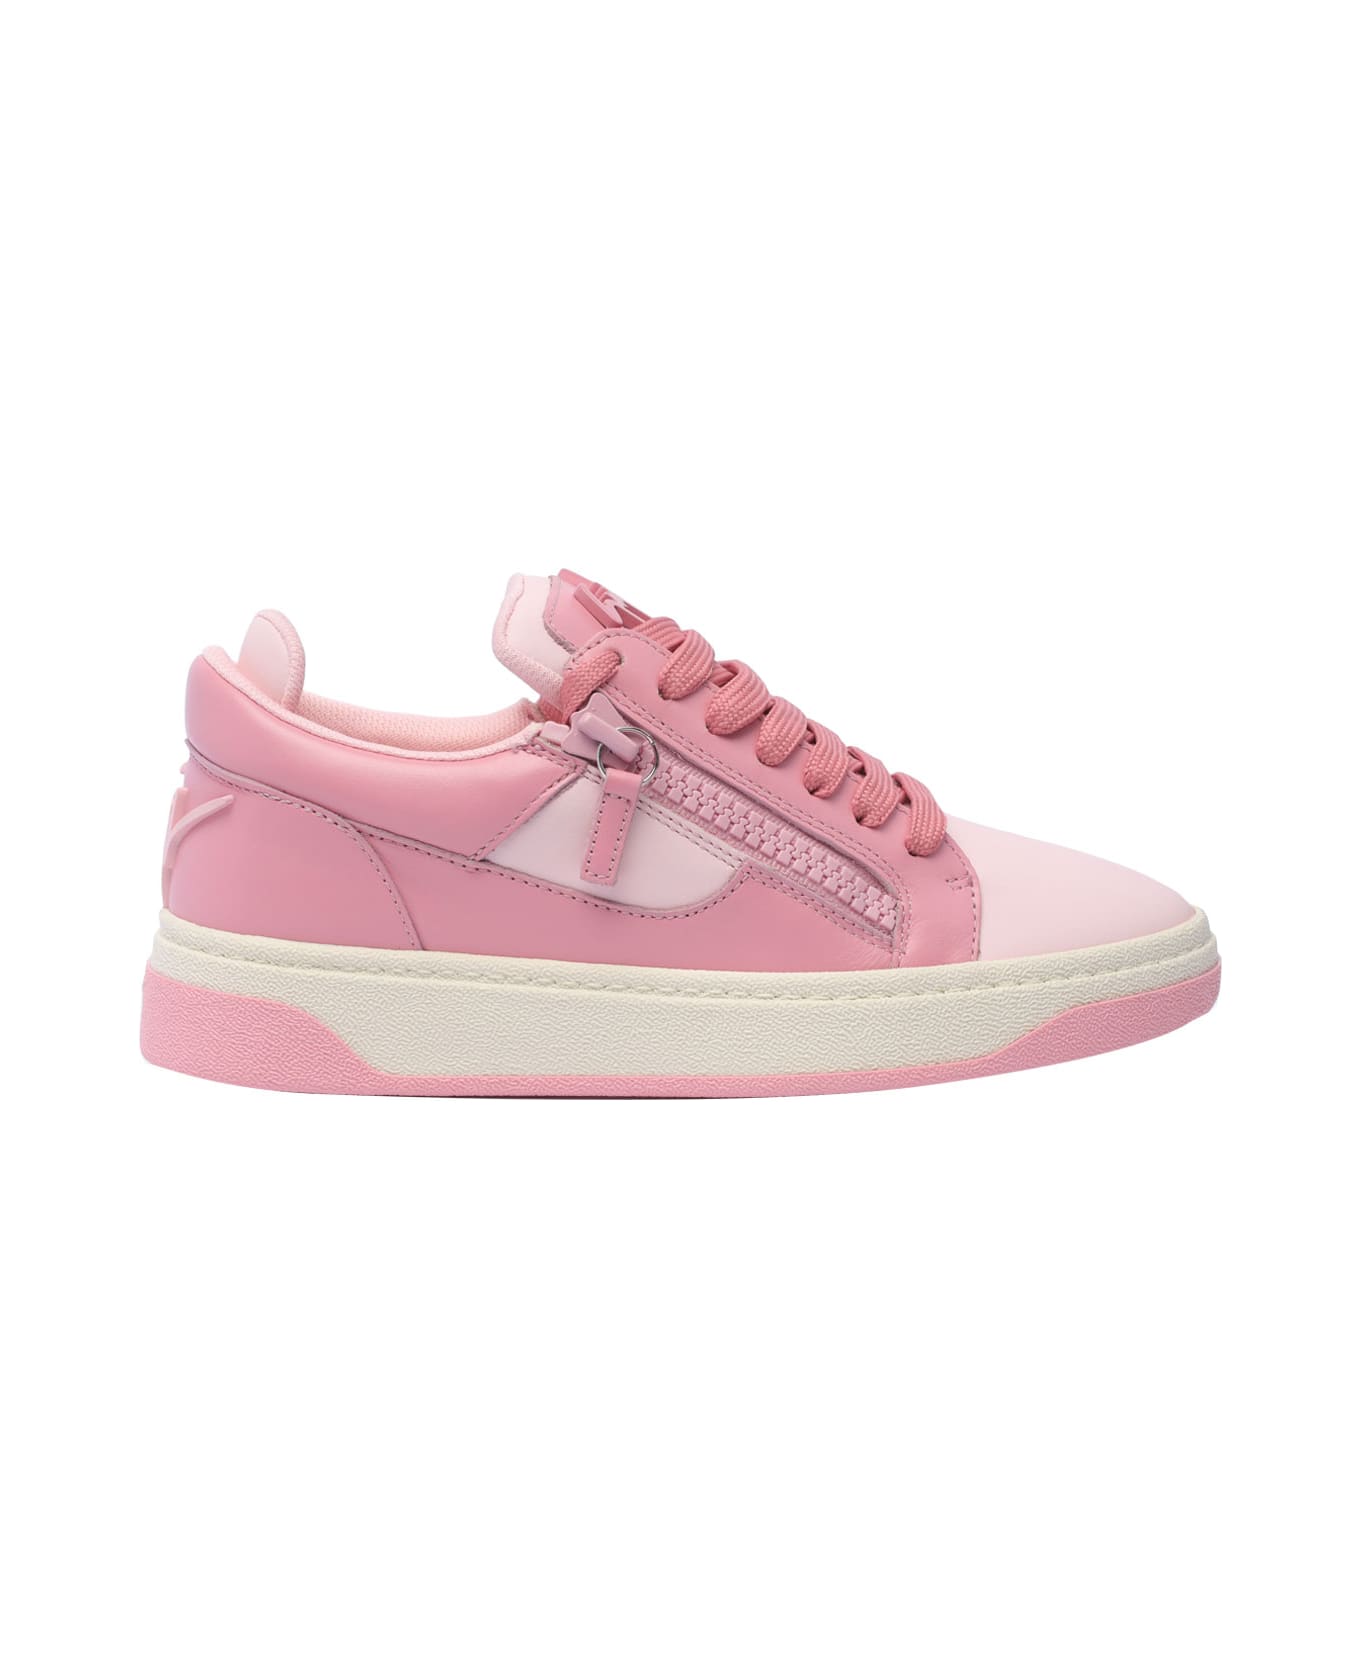 Giuseppe Zanotti Gz94 Sneakers - Pink スニーカー